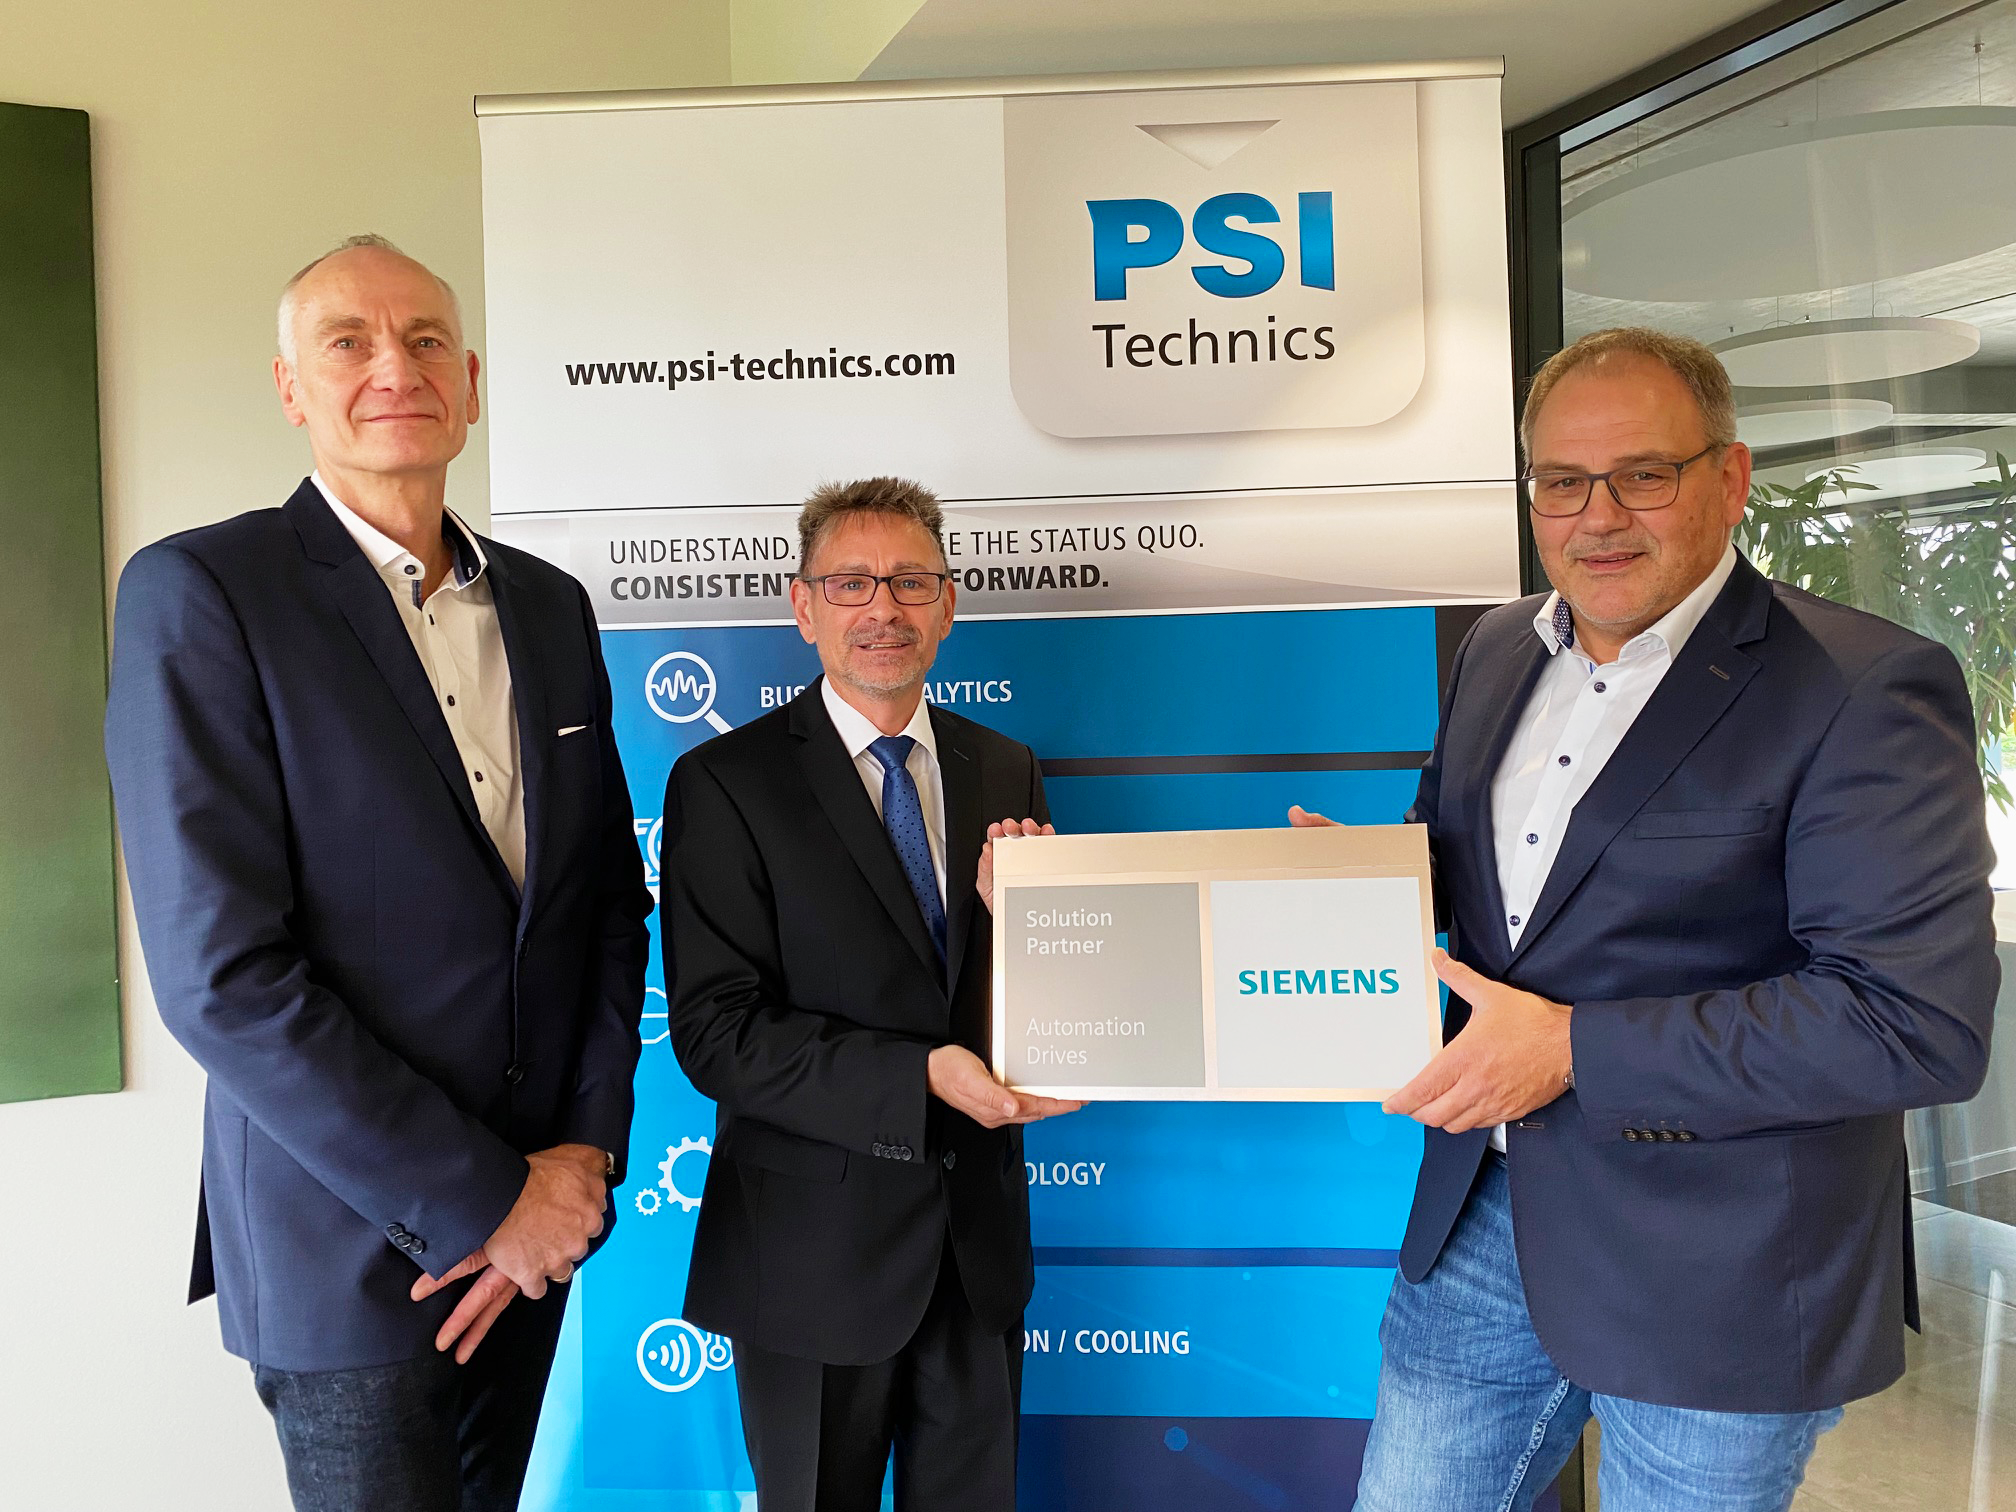 PSI Technics, Übergabe Siemens-Partner Zertifikat, Siemens Solution Partner, Automation Drives, Industrial Edge, IIoT Technology